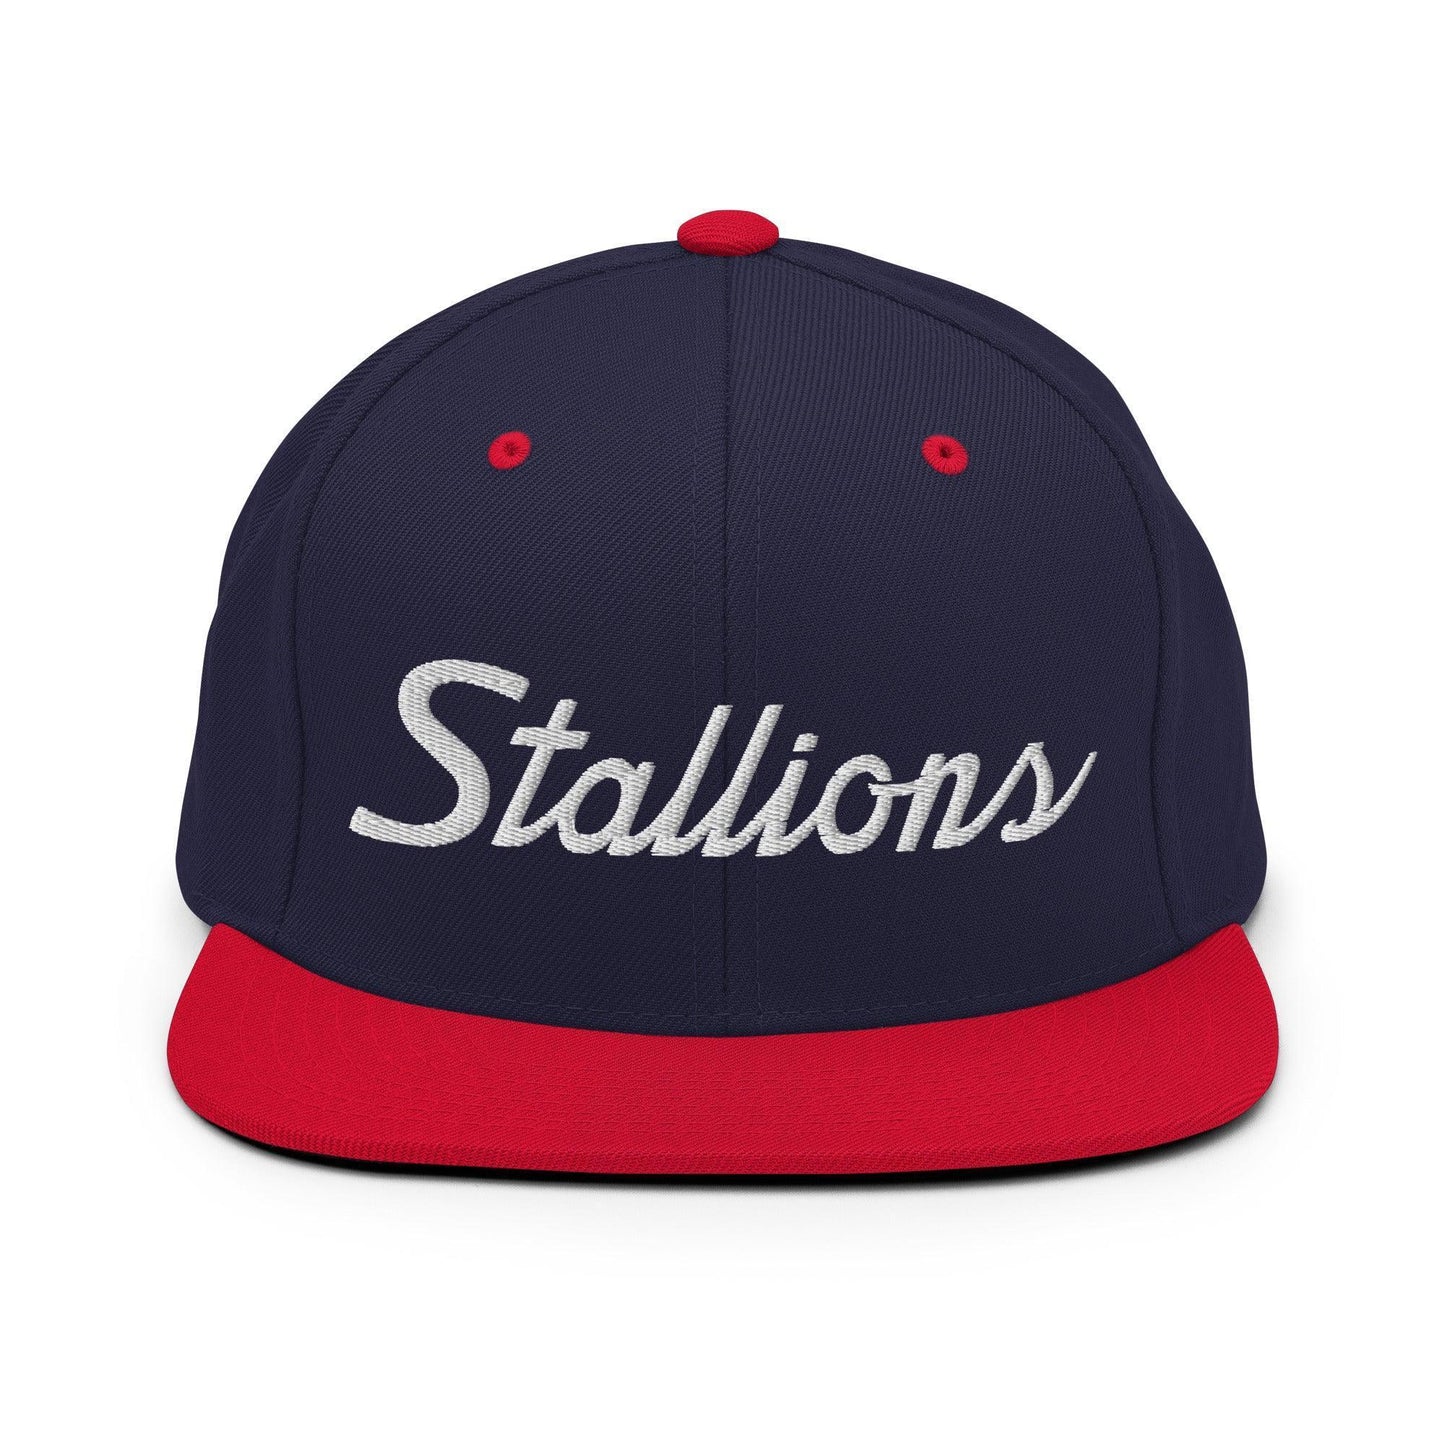 Stallions School Mascot Script Snapback Hat Navy/ Red